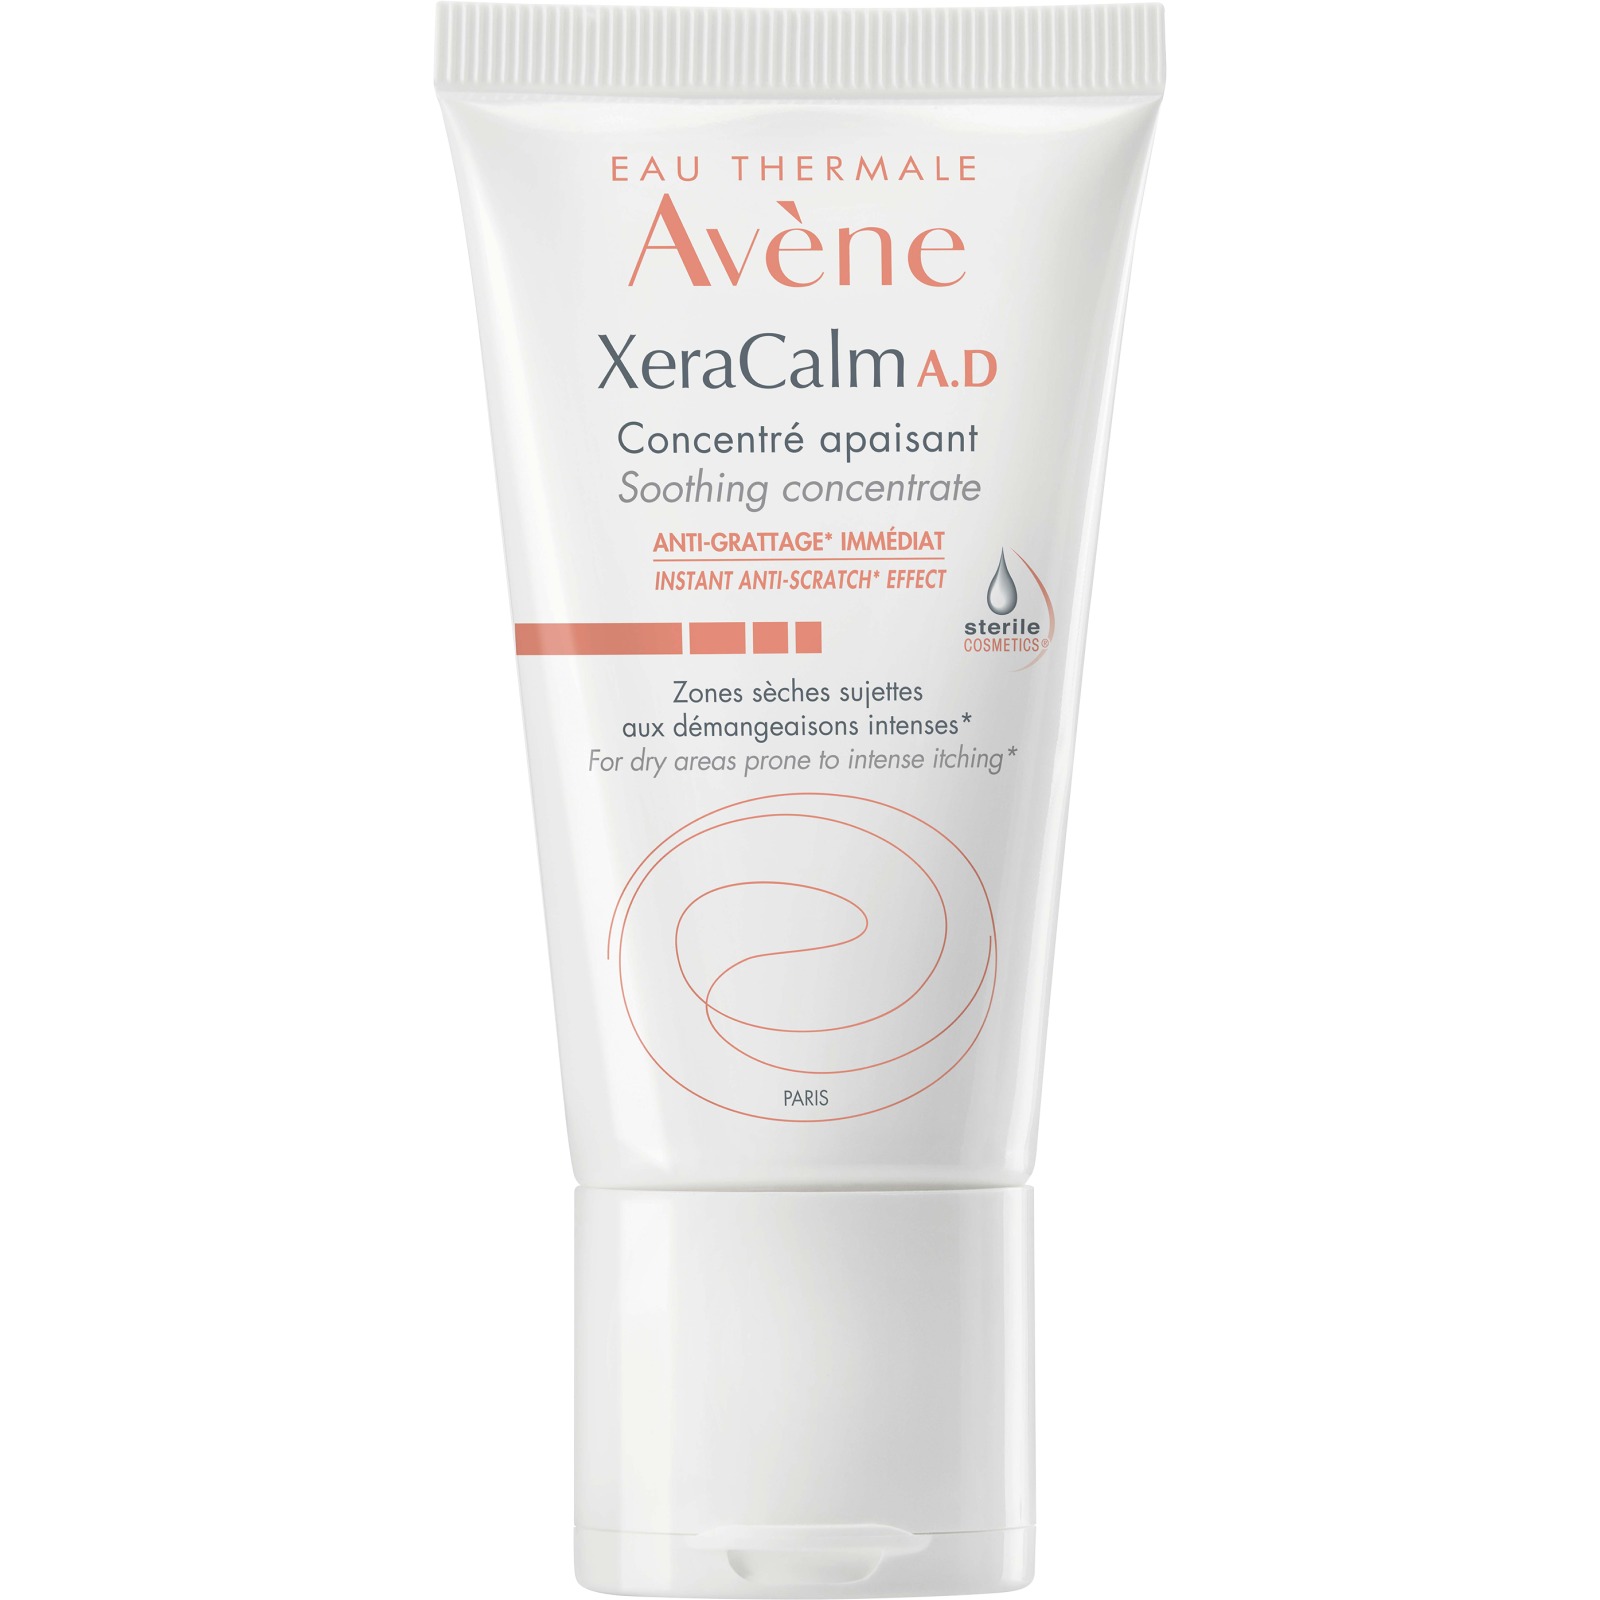 Crema concentrata relipidanta pentru pielea uscata XeraCalm AD, 50ml, Avene